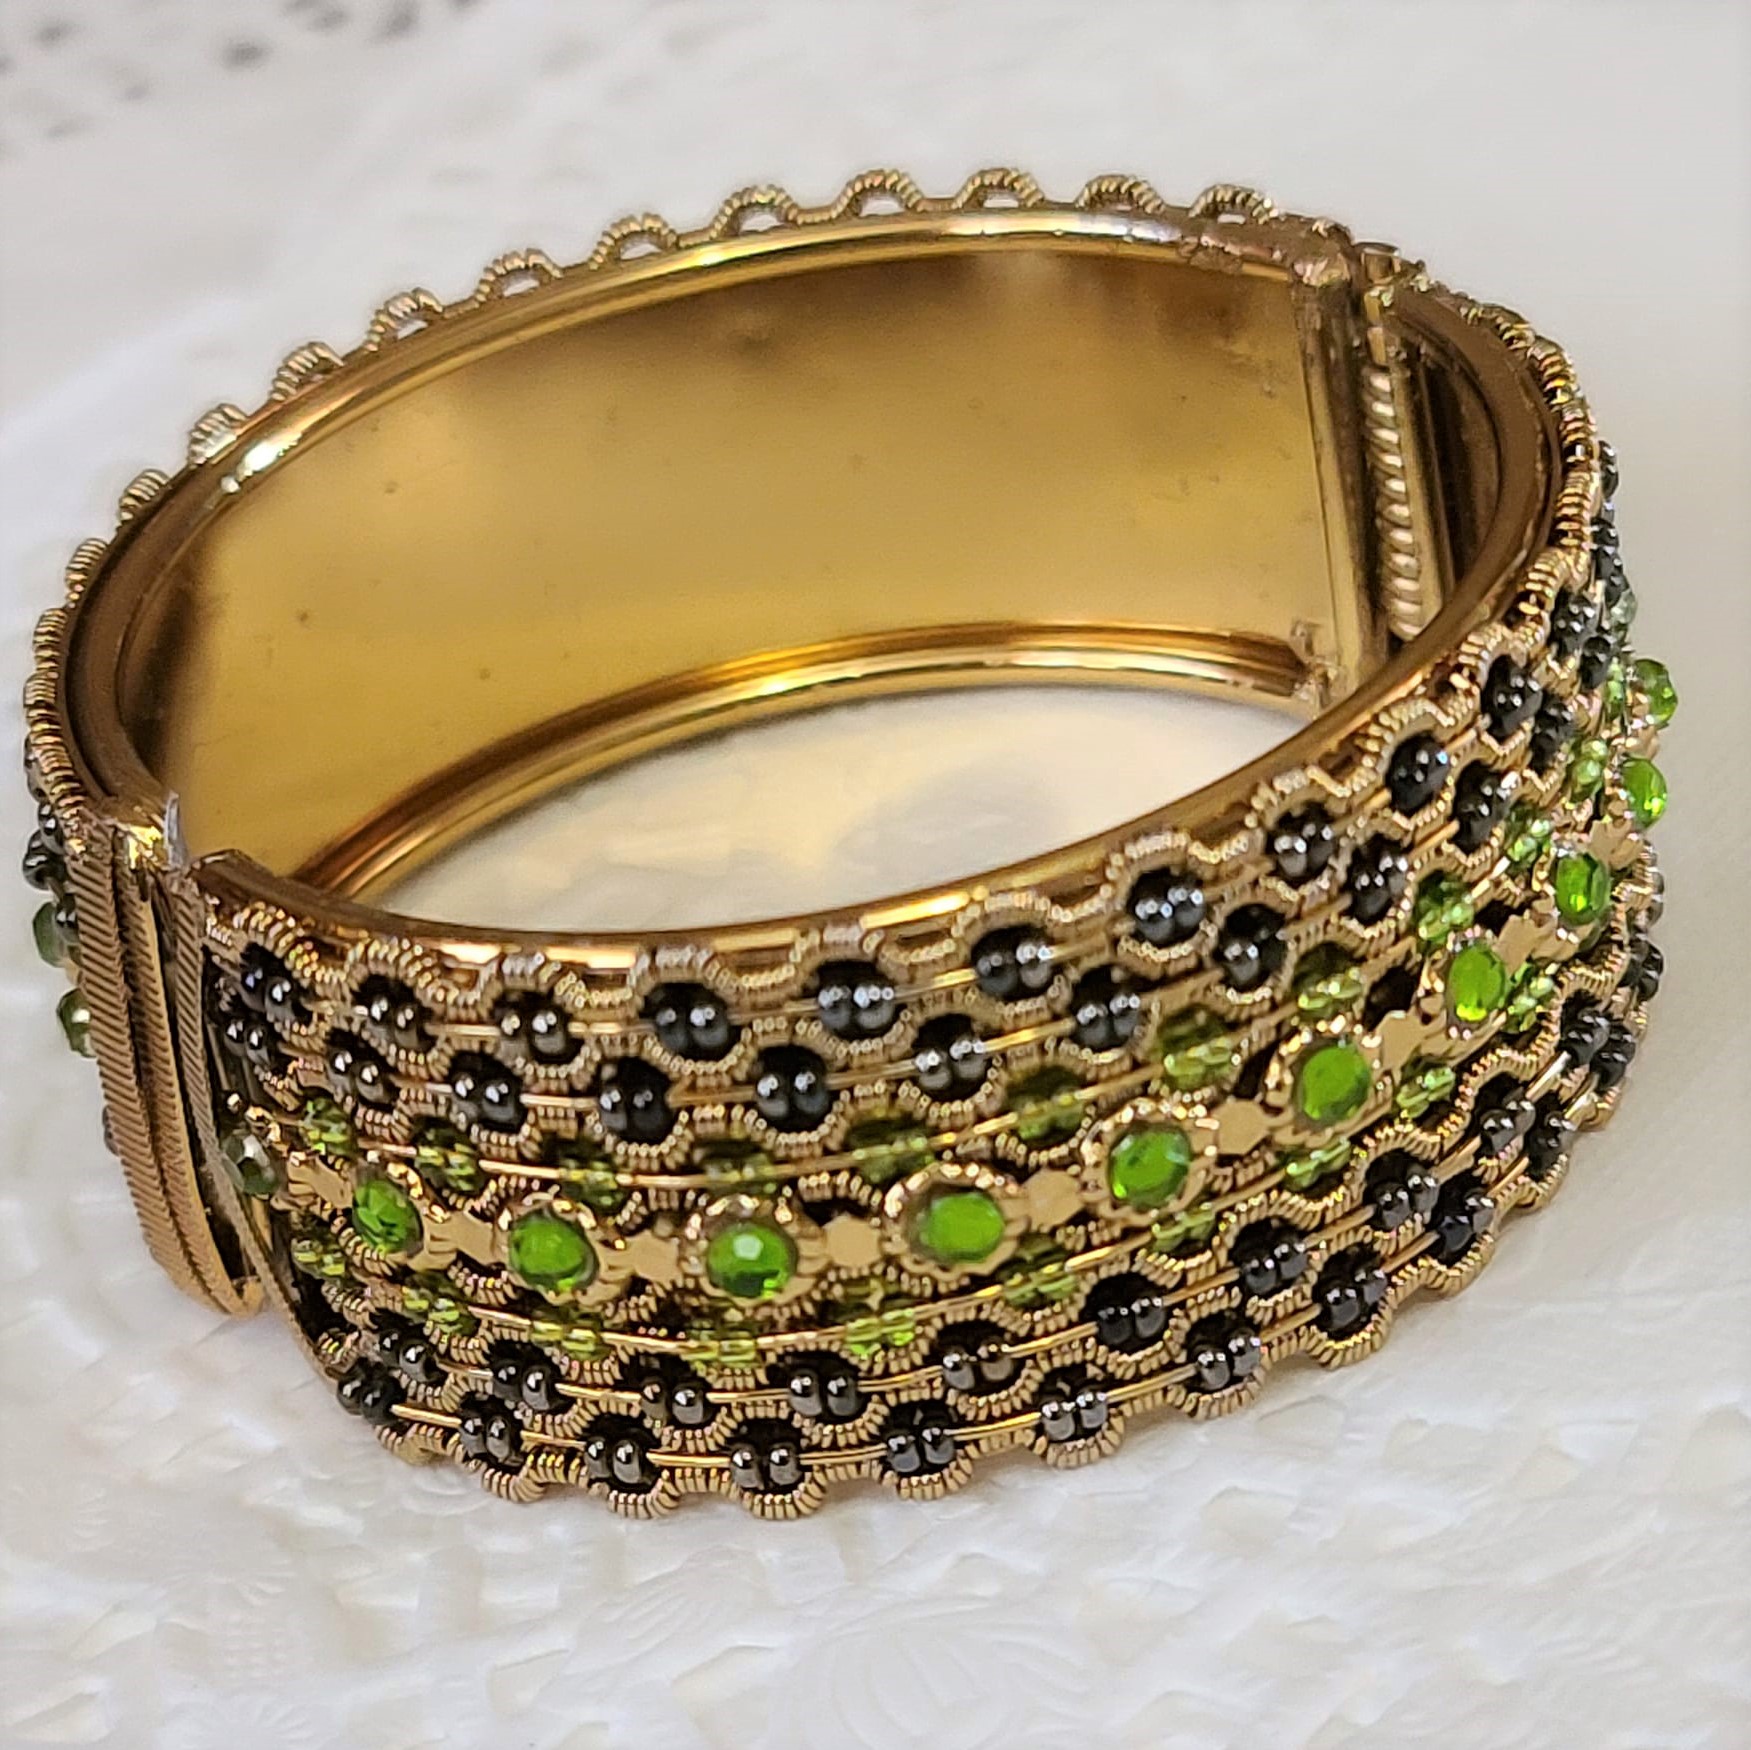 Jewels and Rhinestones Ornate Clamp Style Bracelet